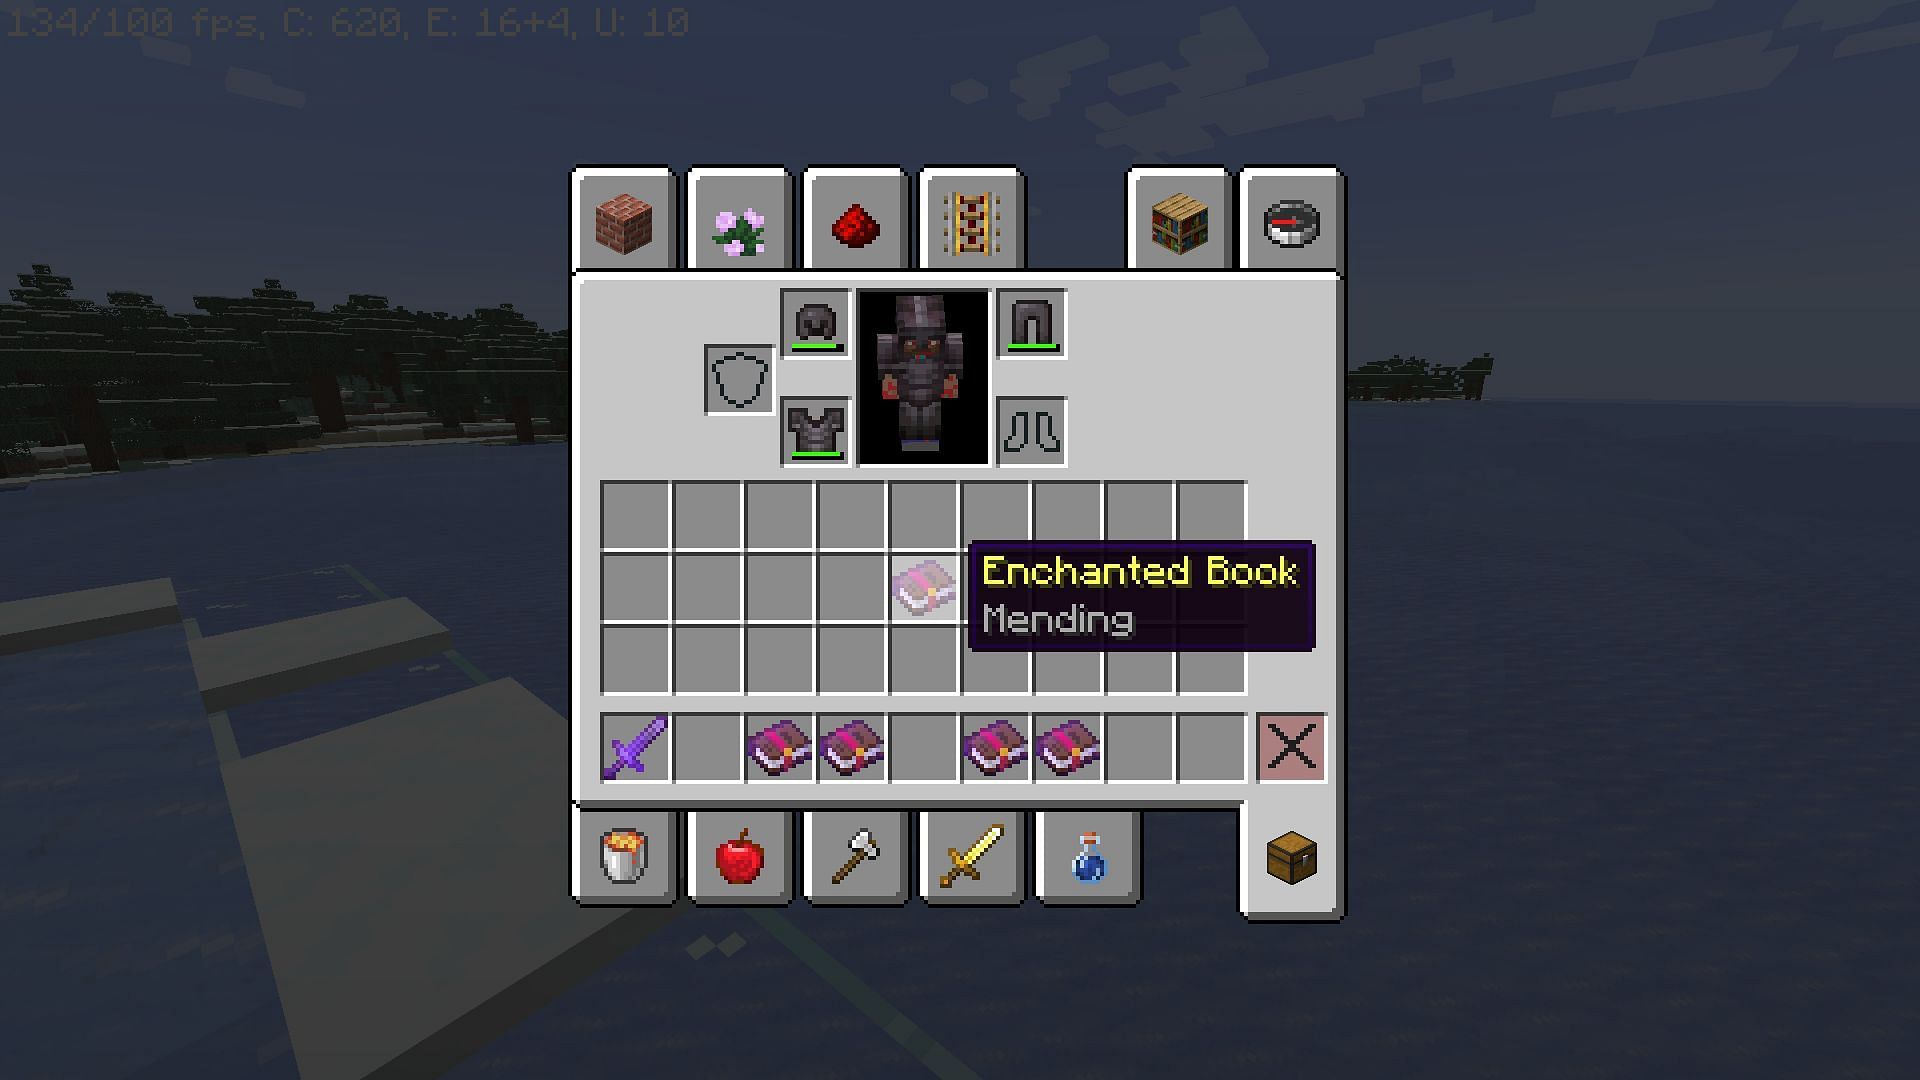 Mending enchanted book (Image via Minecraft)